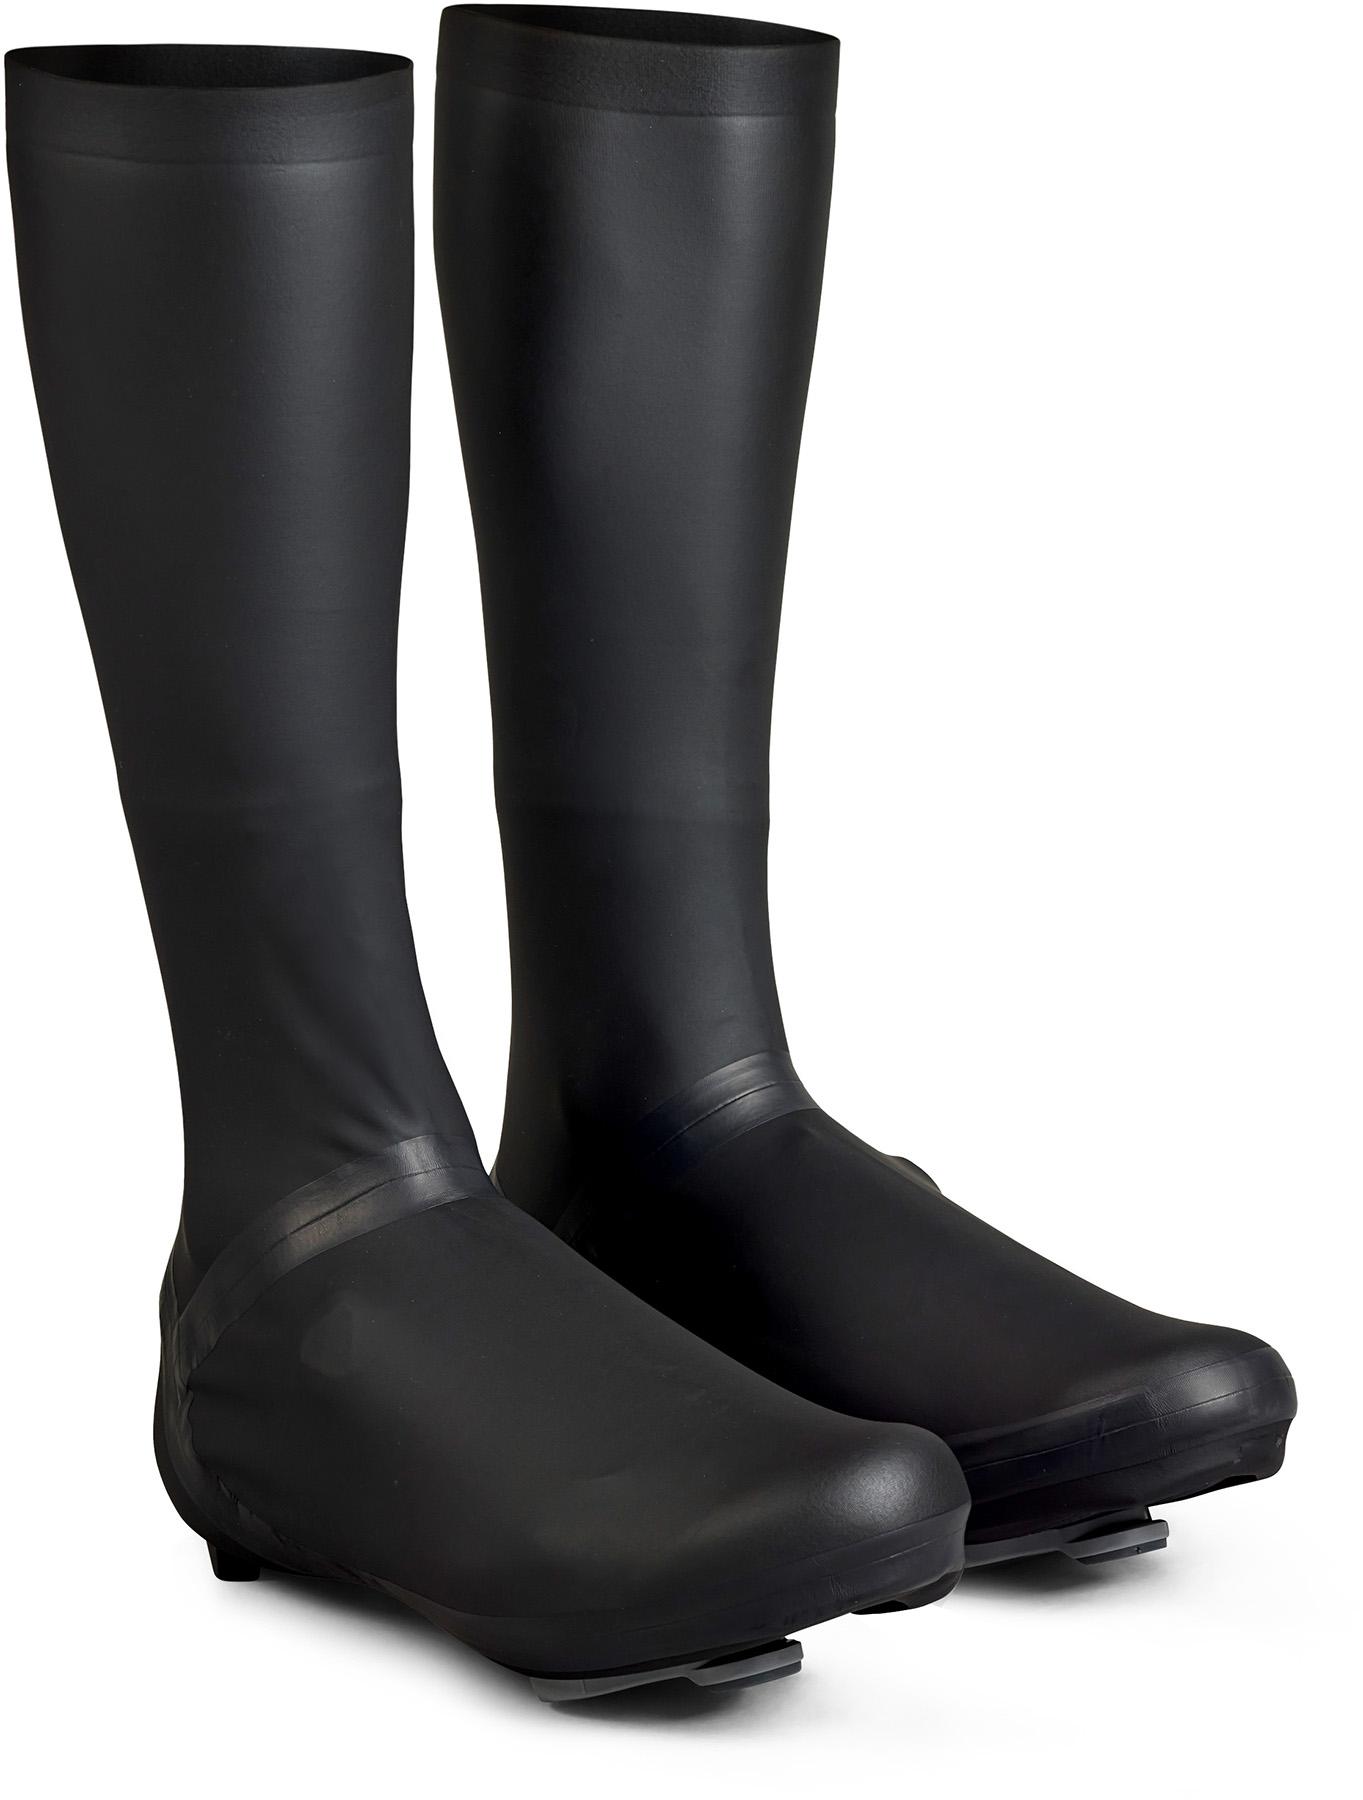 Gripgrab Aqua Shield High Cut Road Shoe Covers - Black